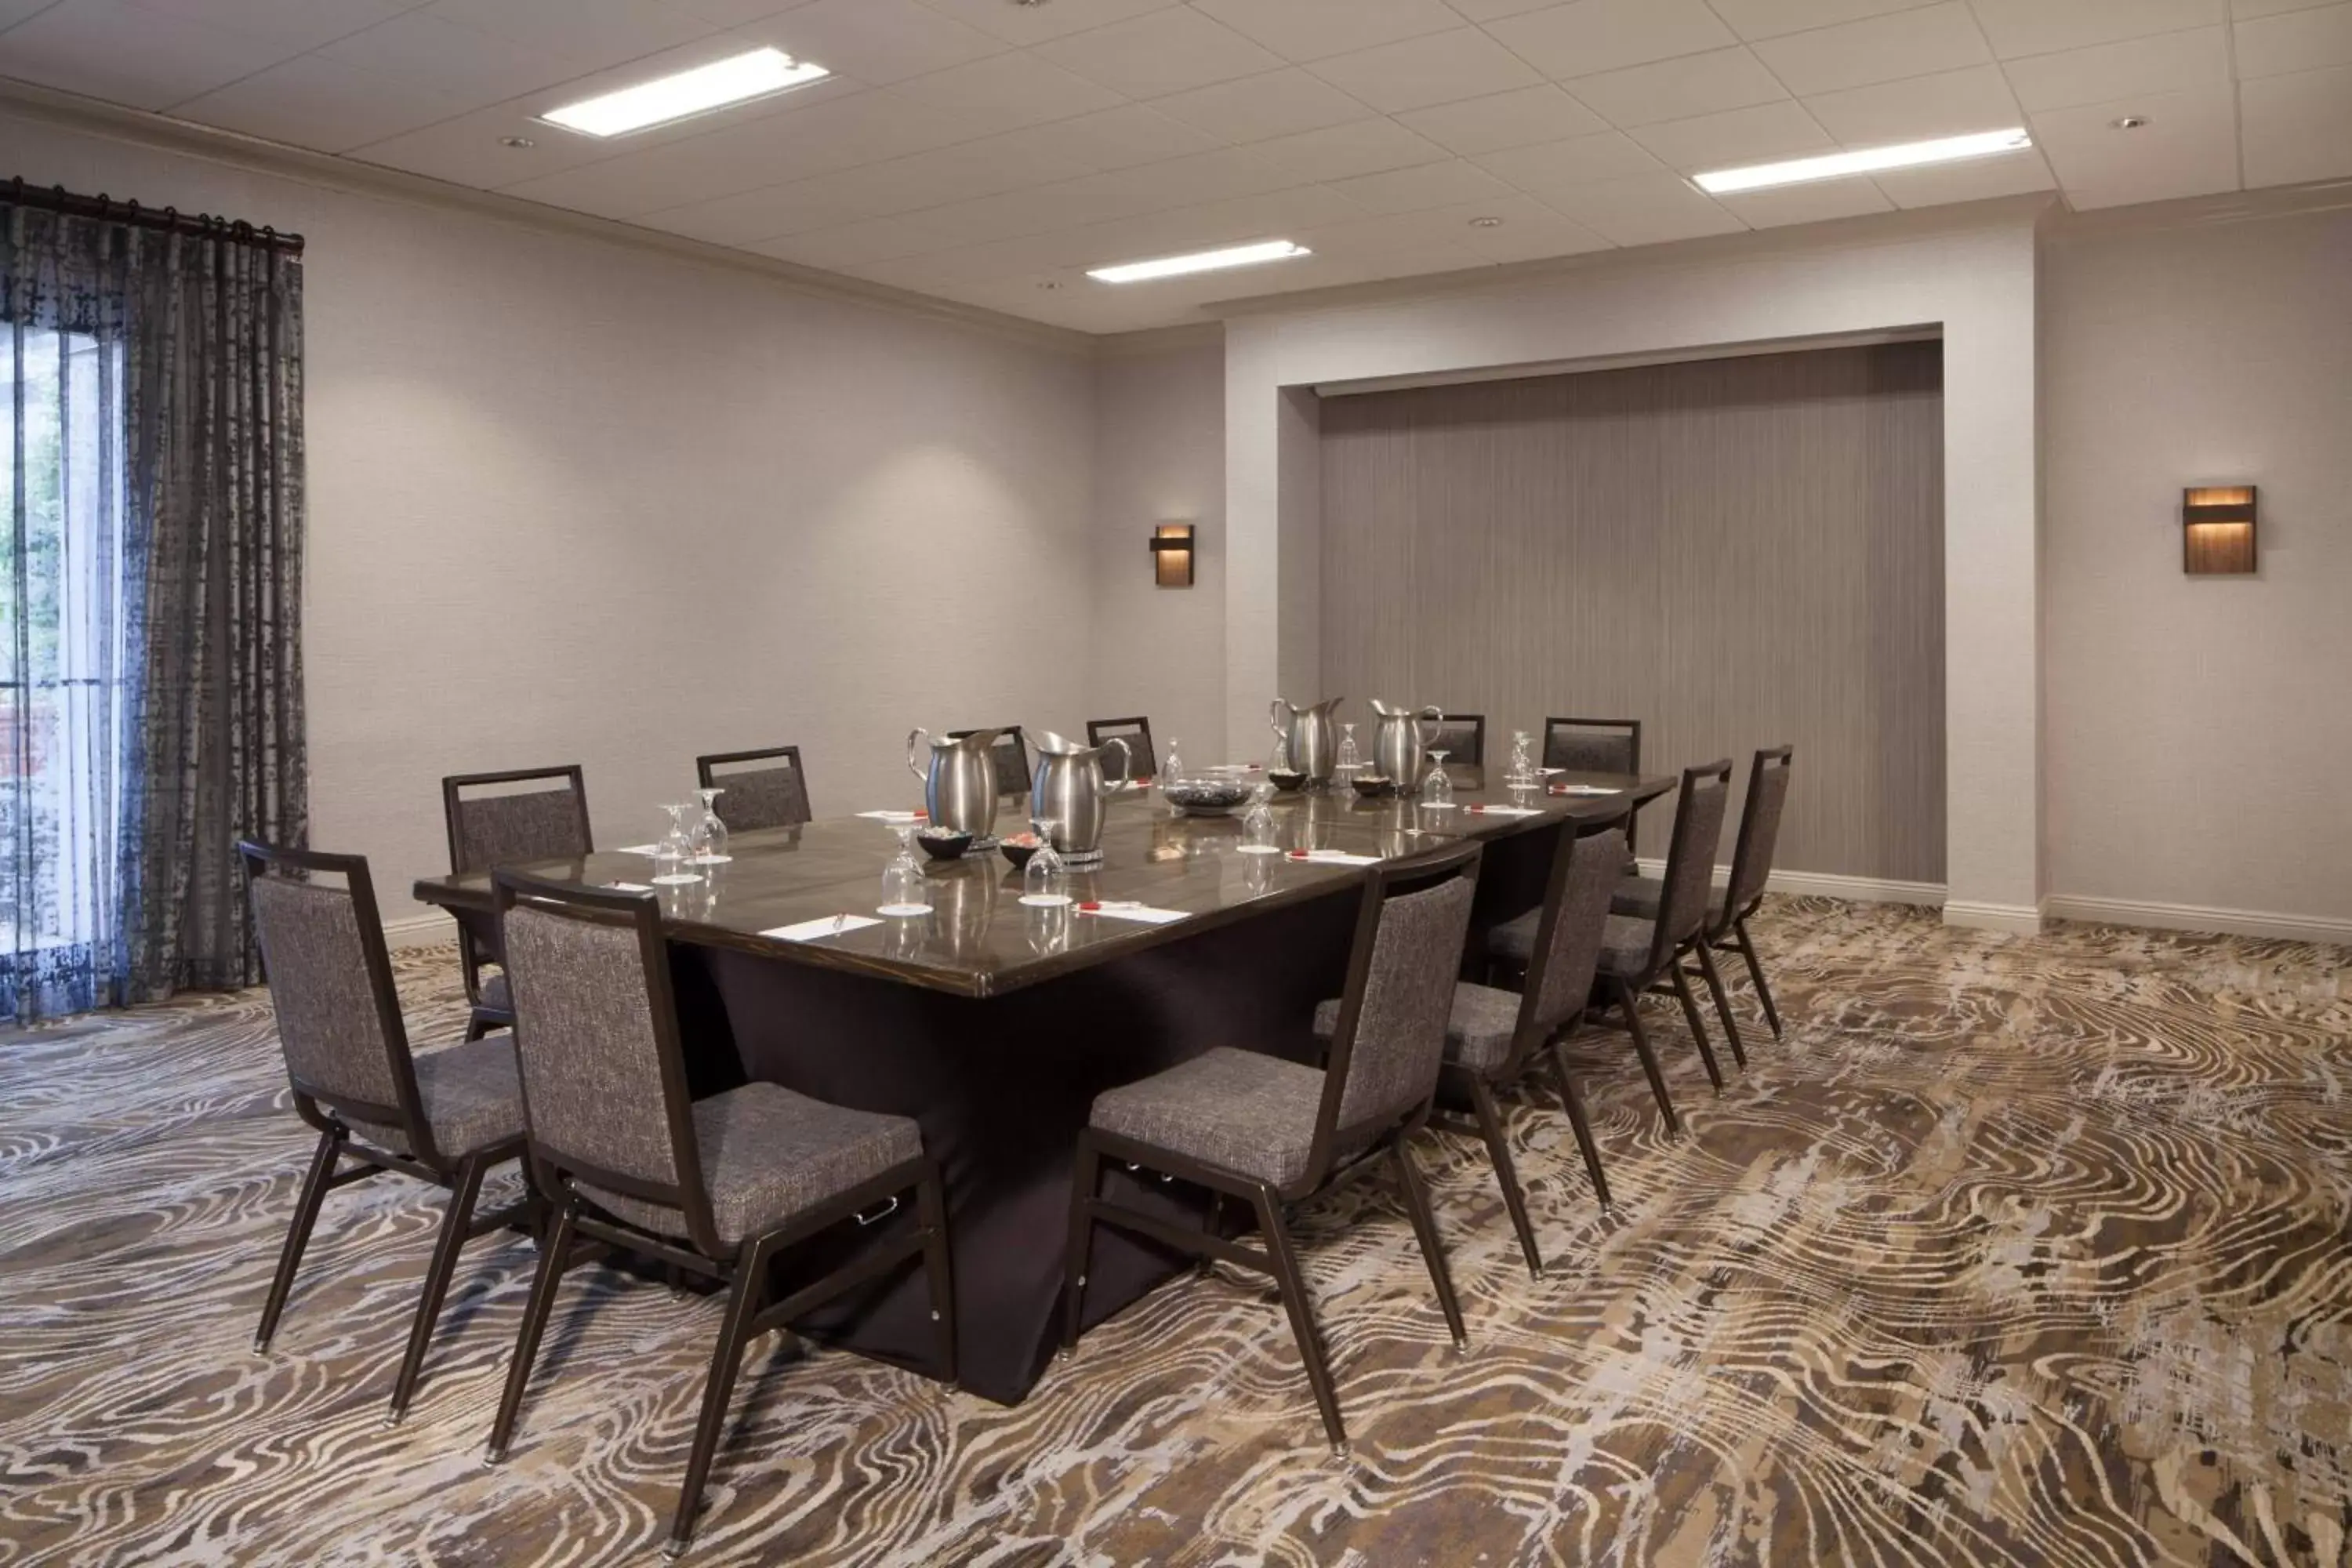 Meeting/conference room in Omaha Marriott